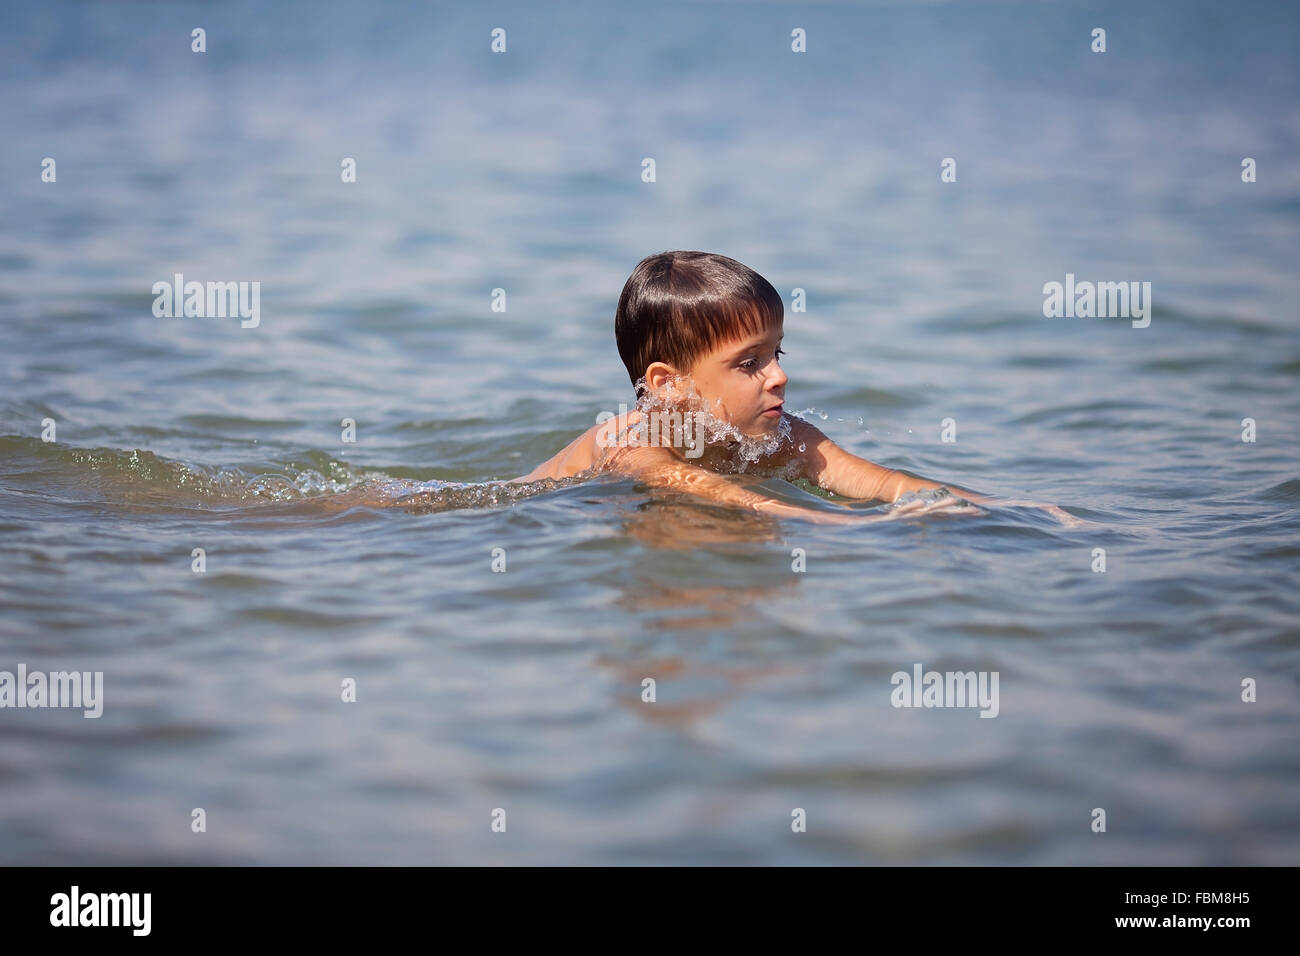 Garçon nager dans la mer Banque D'Images